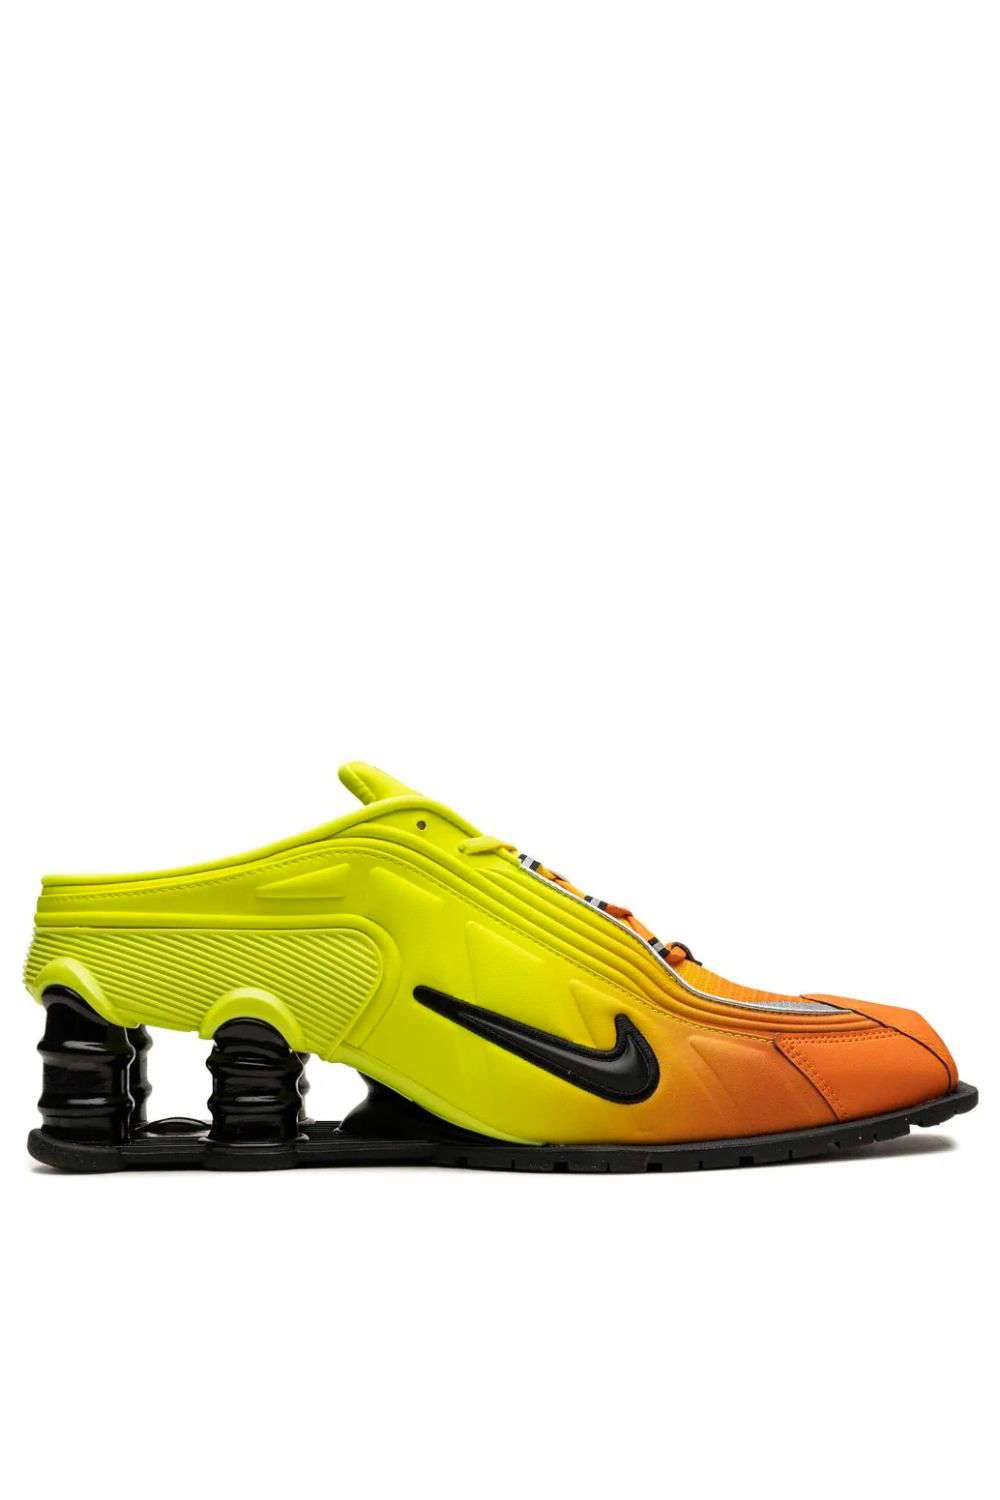 Zapatillas Shox R4 Mule ""Safety Orange"" de Nike x Martine Rose